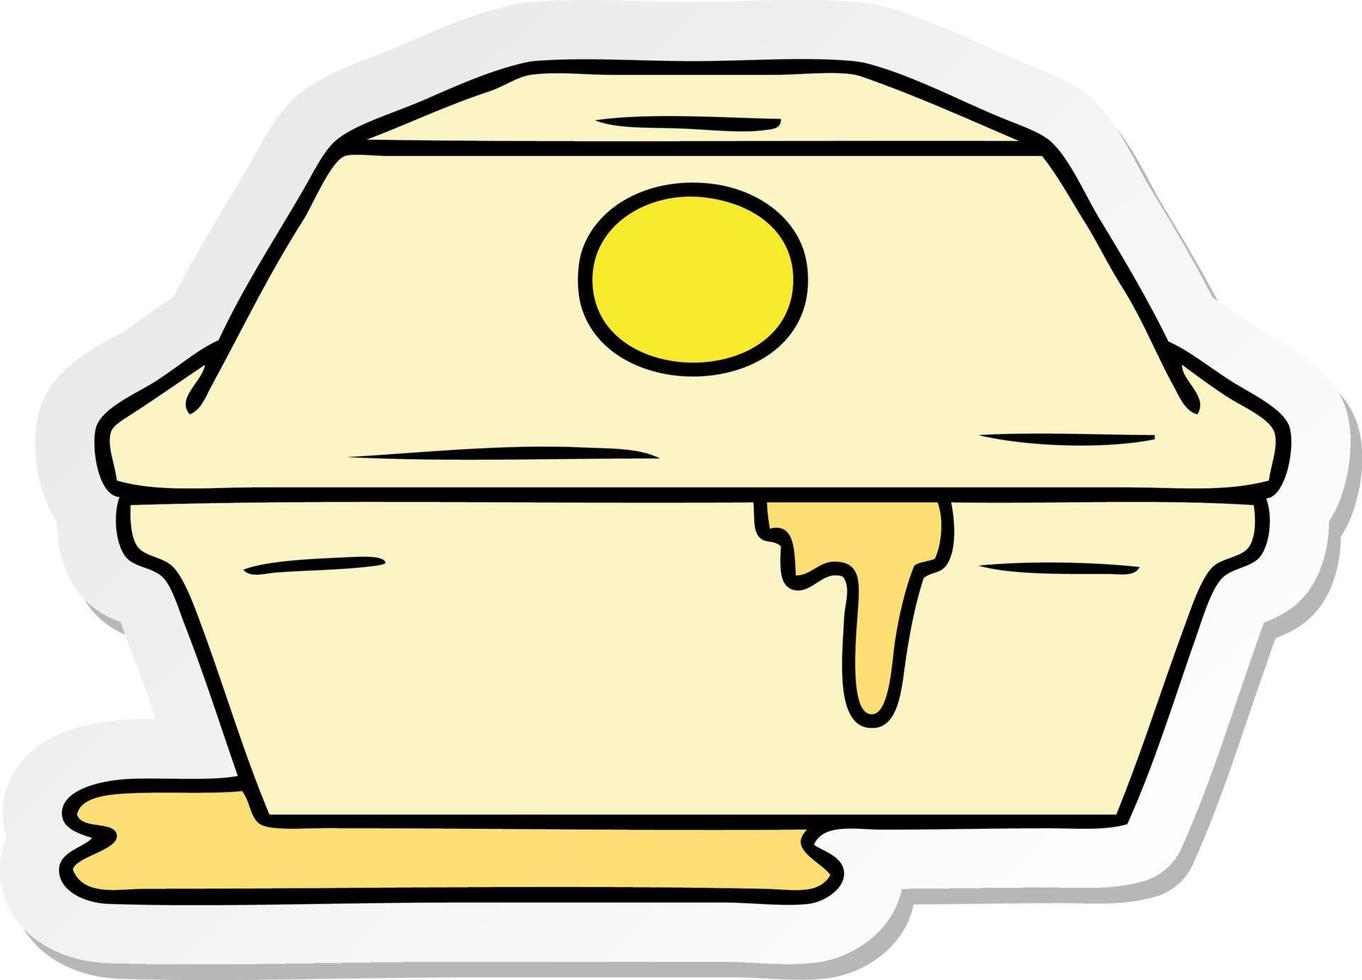 Aufkleber-Cartoon-Doodle eines Fast-Food-Burger-Containers vektor